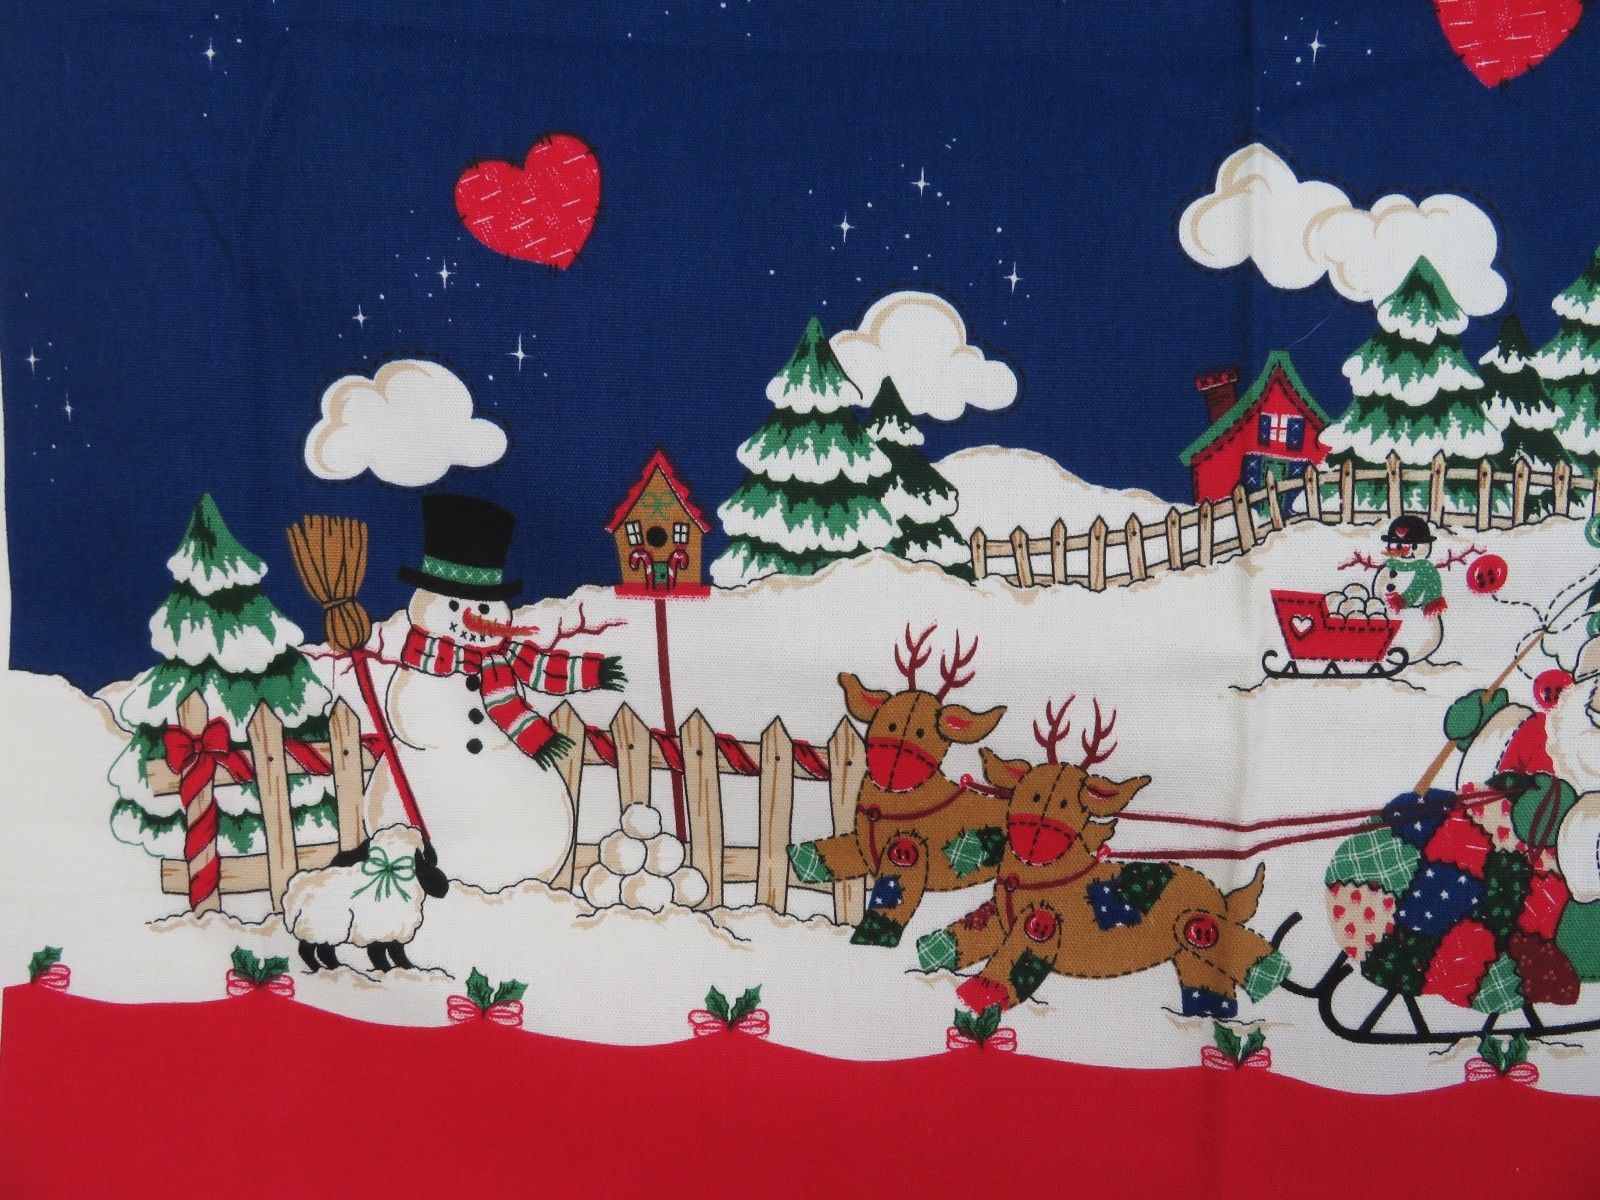 Vintage Apron Cut Sew Fabric Panel Christmas Holiday Blue Santa Butcher Country - At Grandma's Table